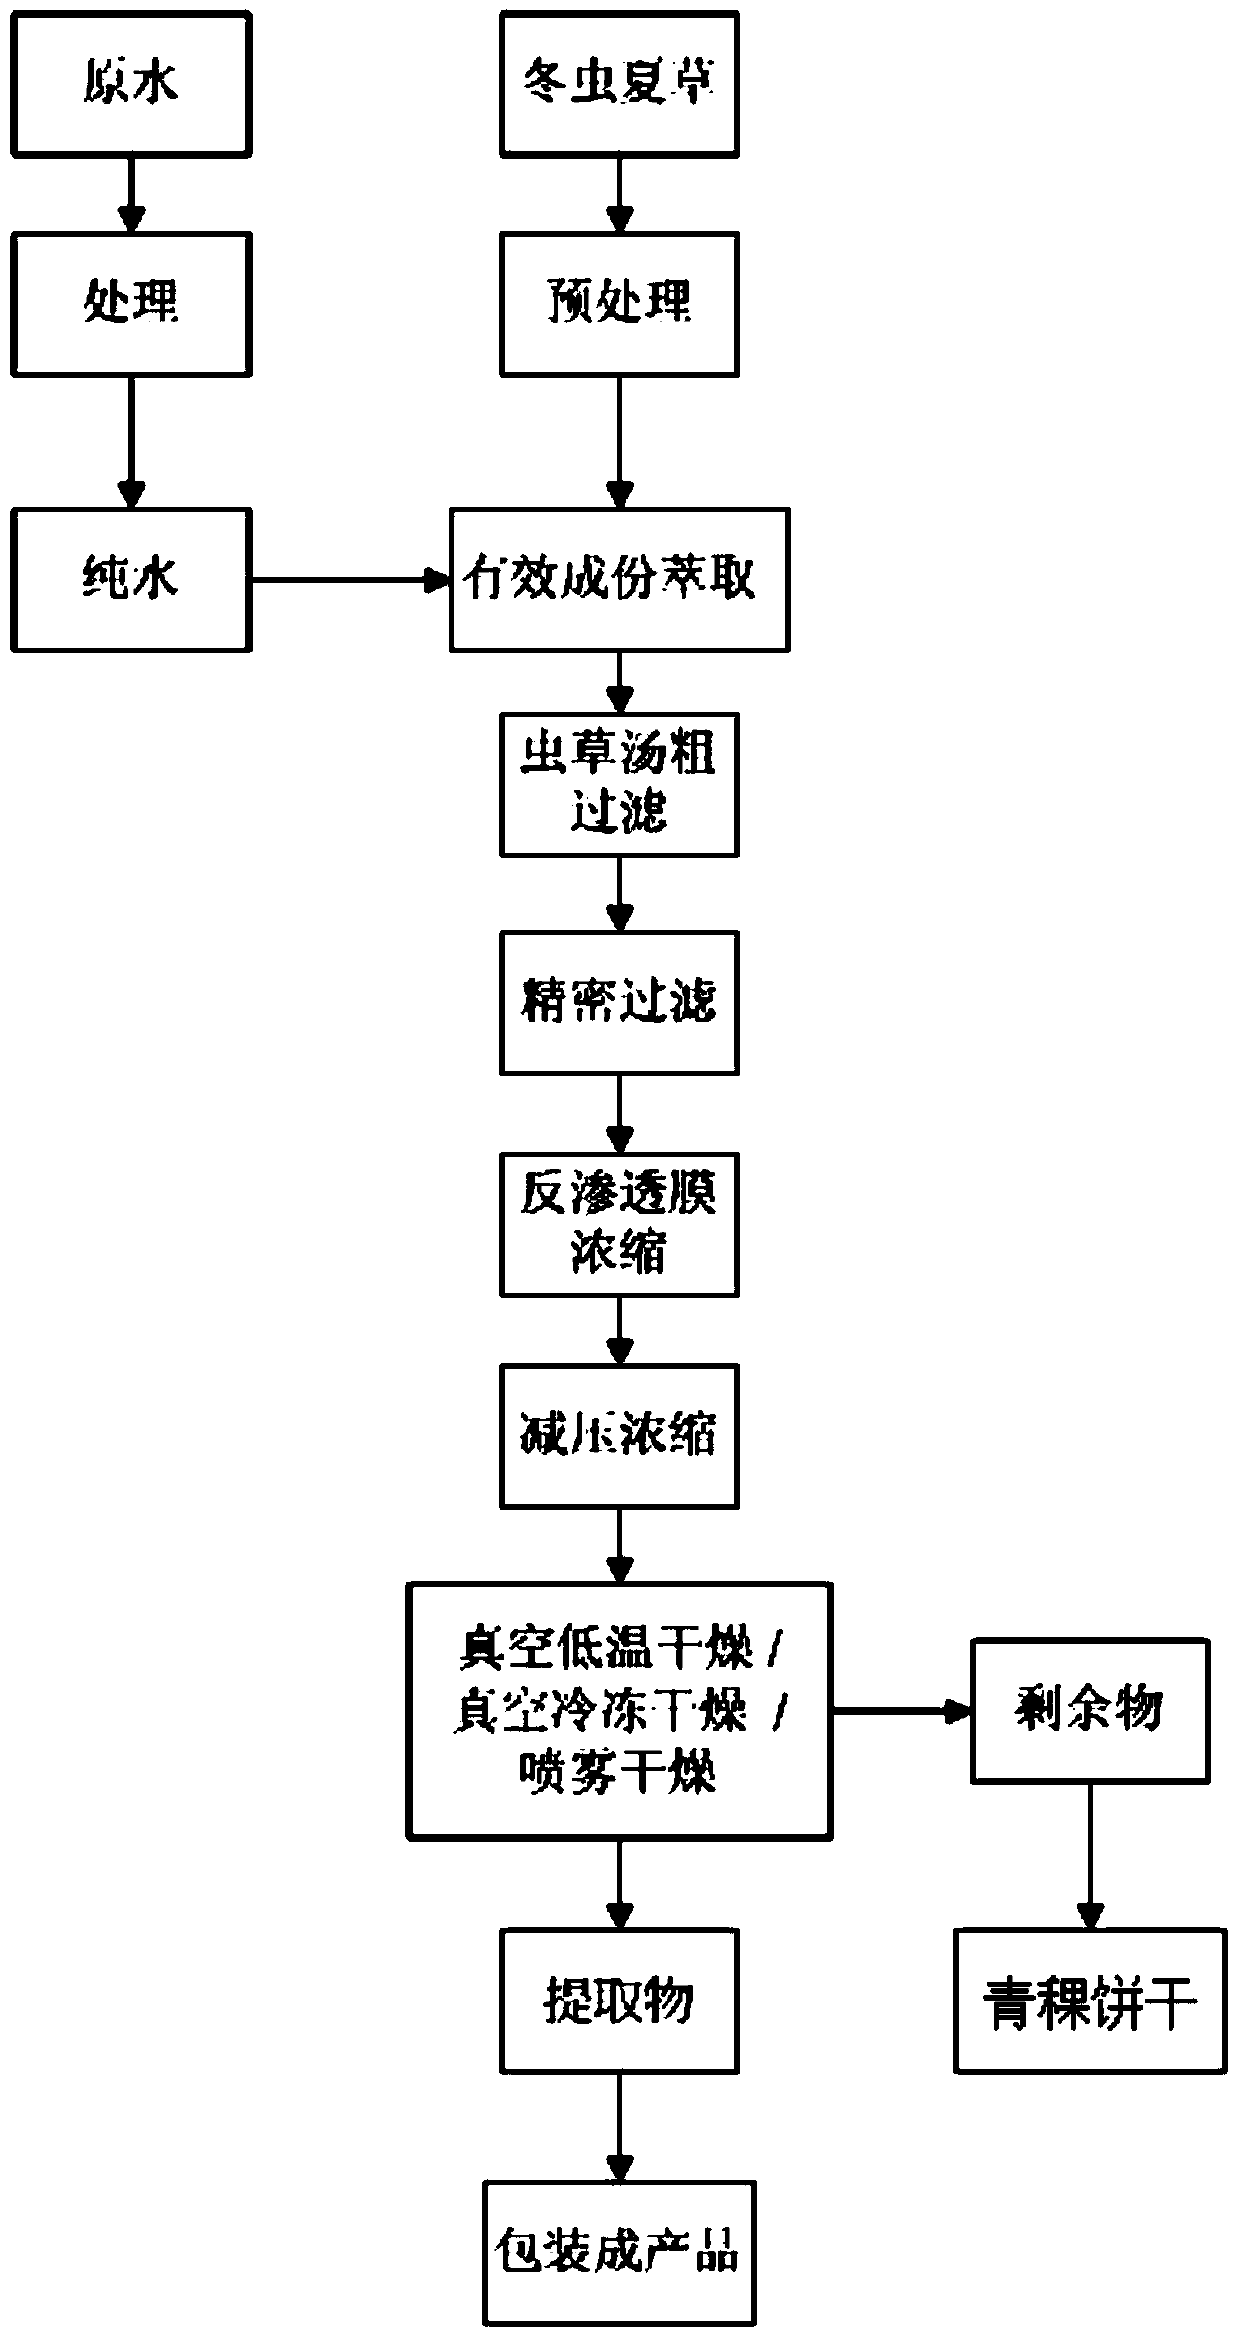 Extraction method of cordyceps sinensis essence substances